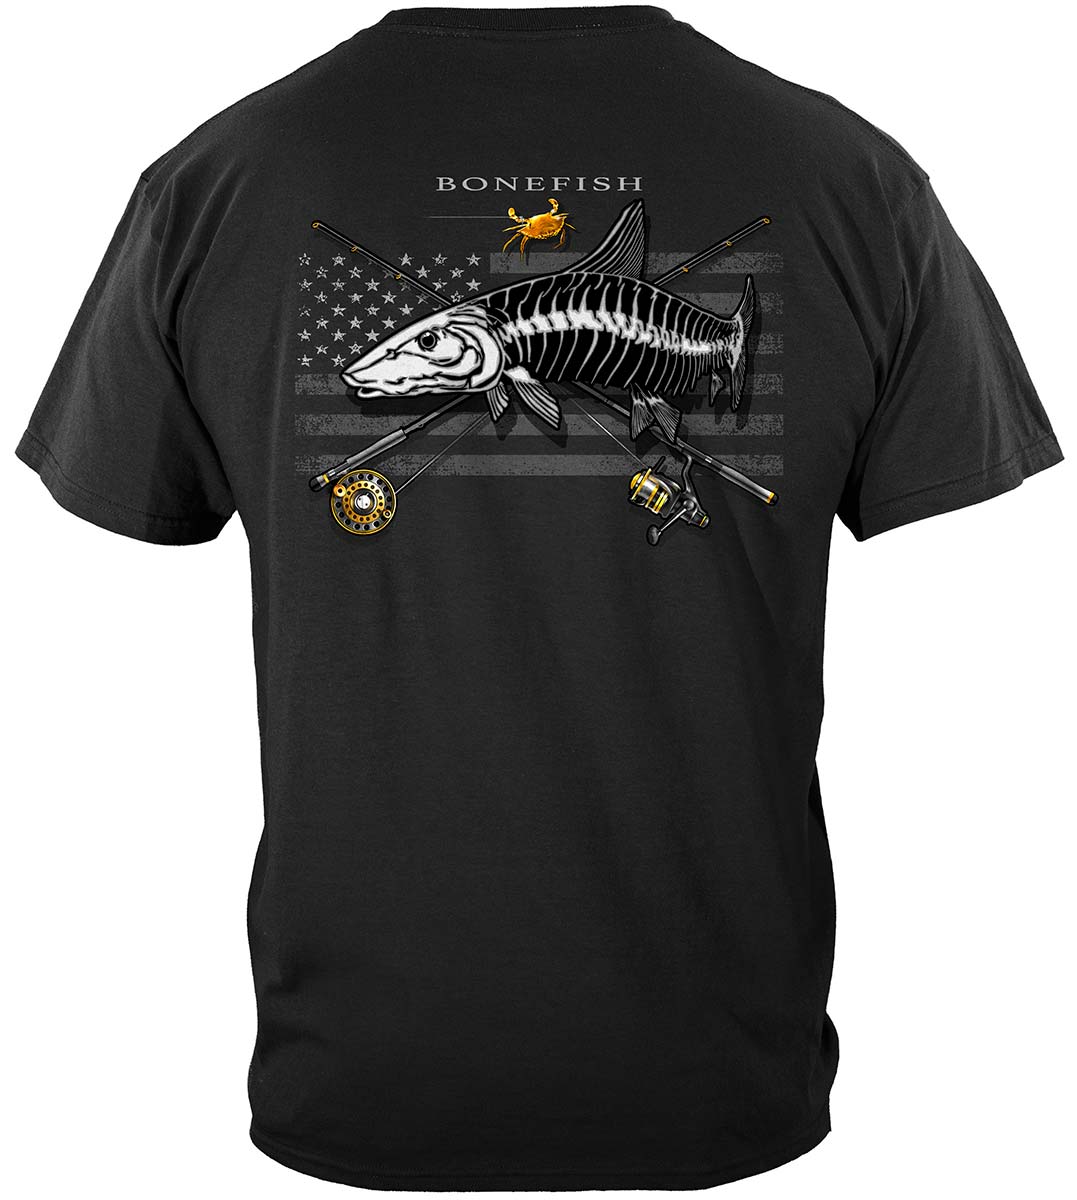 Black Flag Patriotic Bone Fish Premium Hooded Sweat Shirt